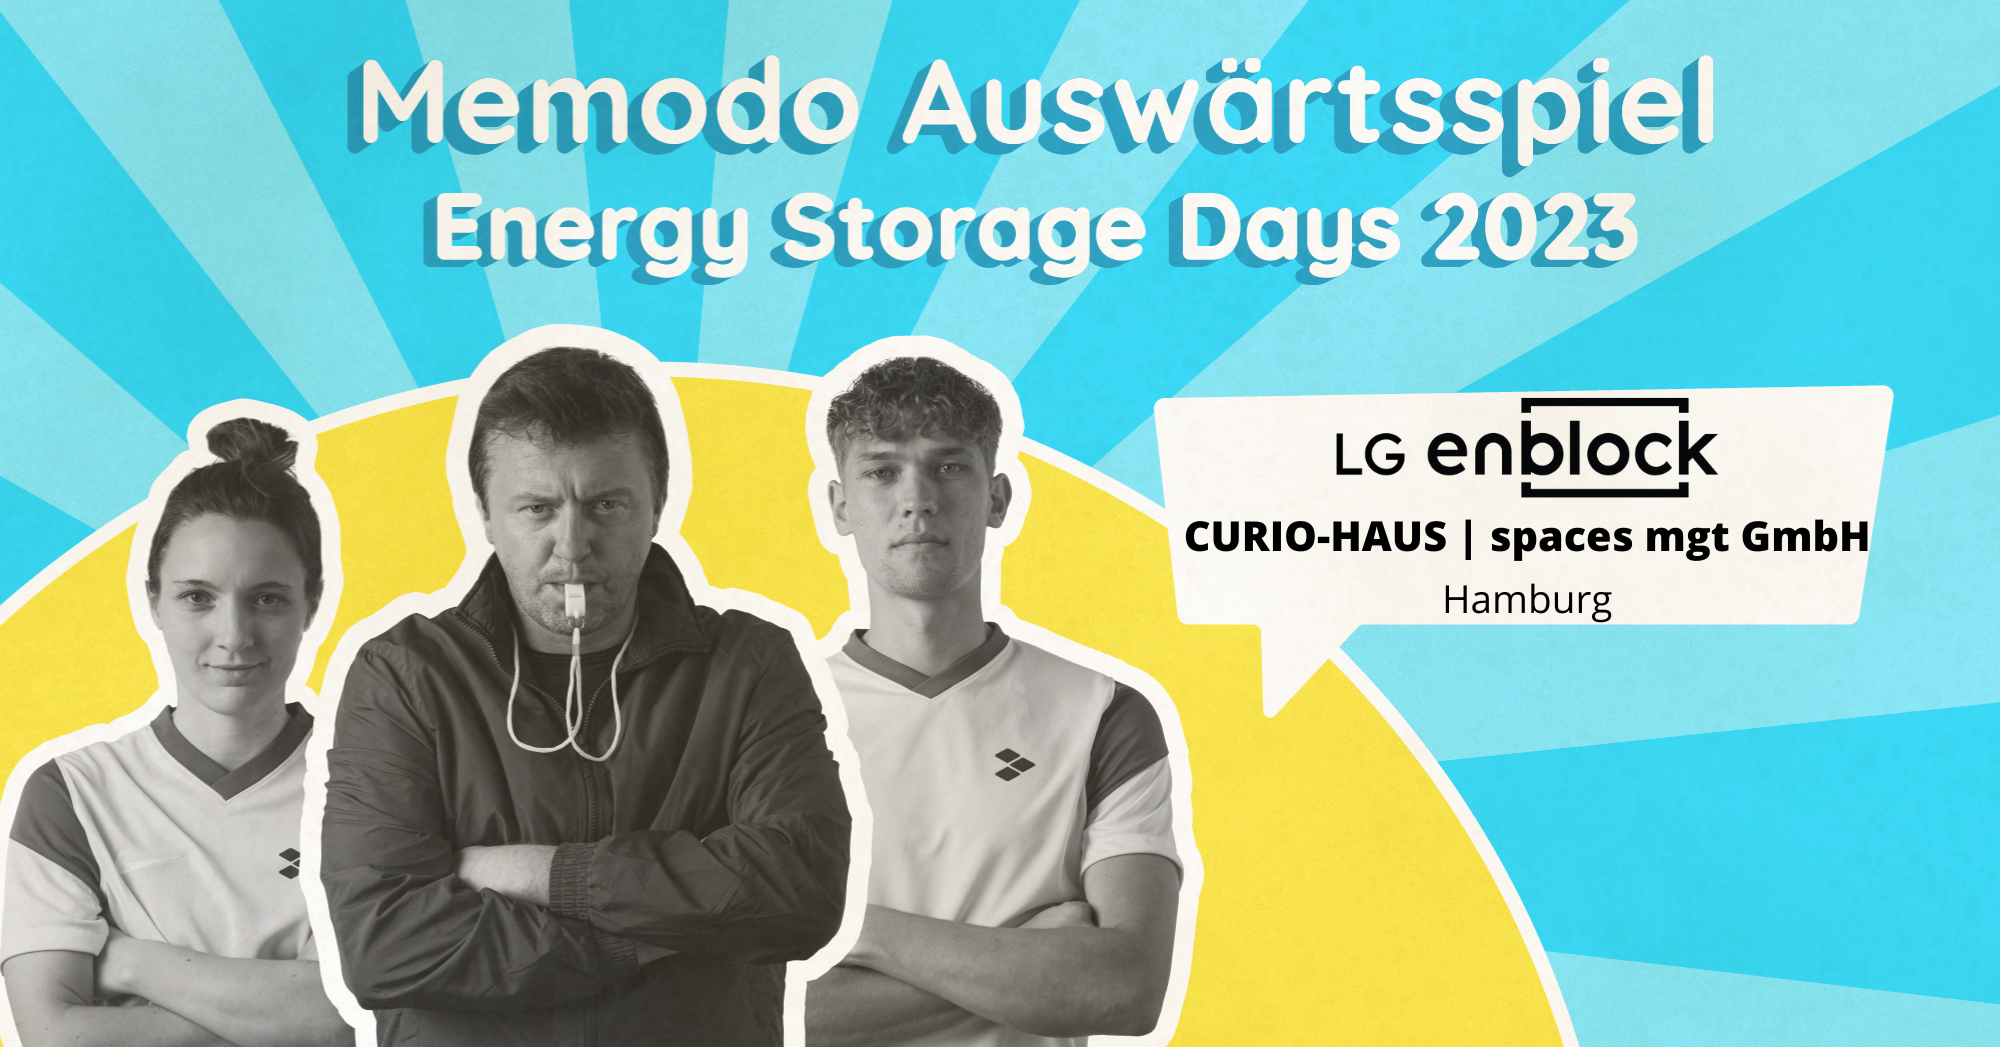 Memodo Energy Storage Days 2023